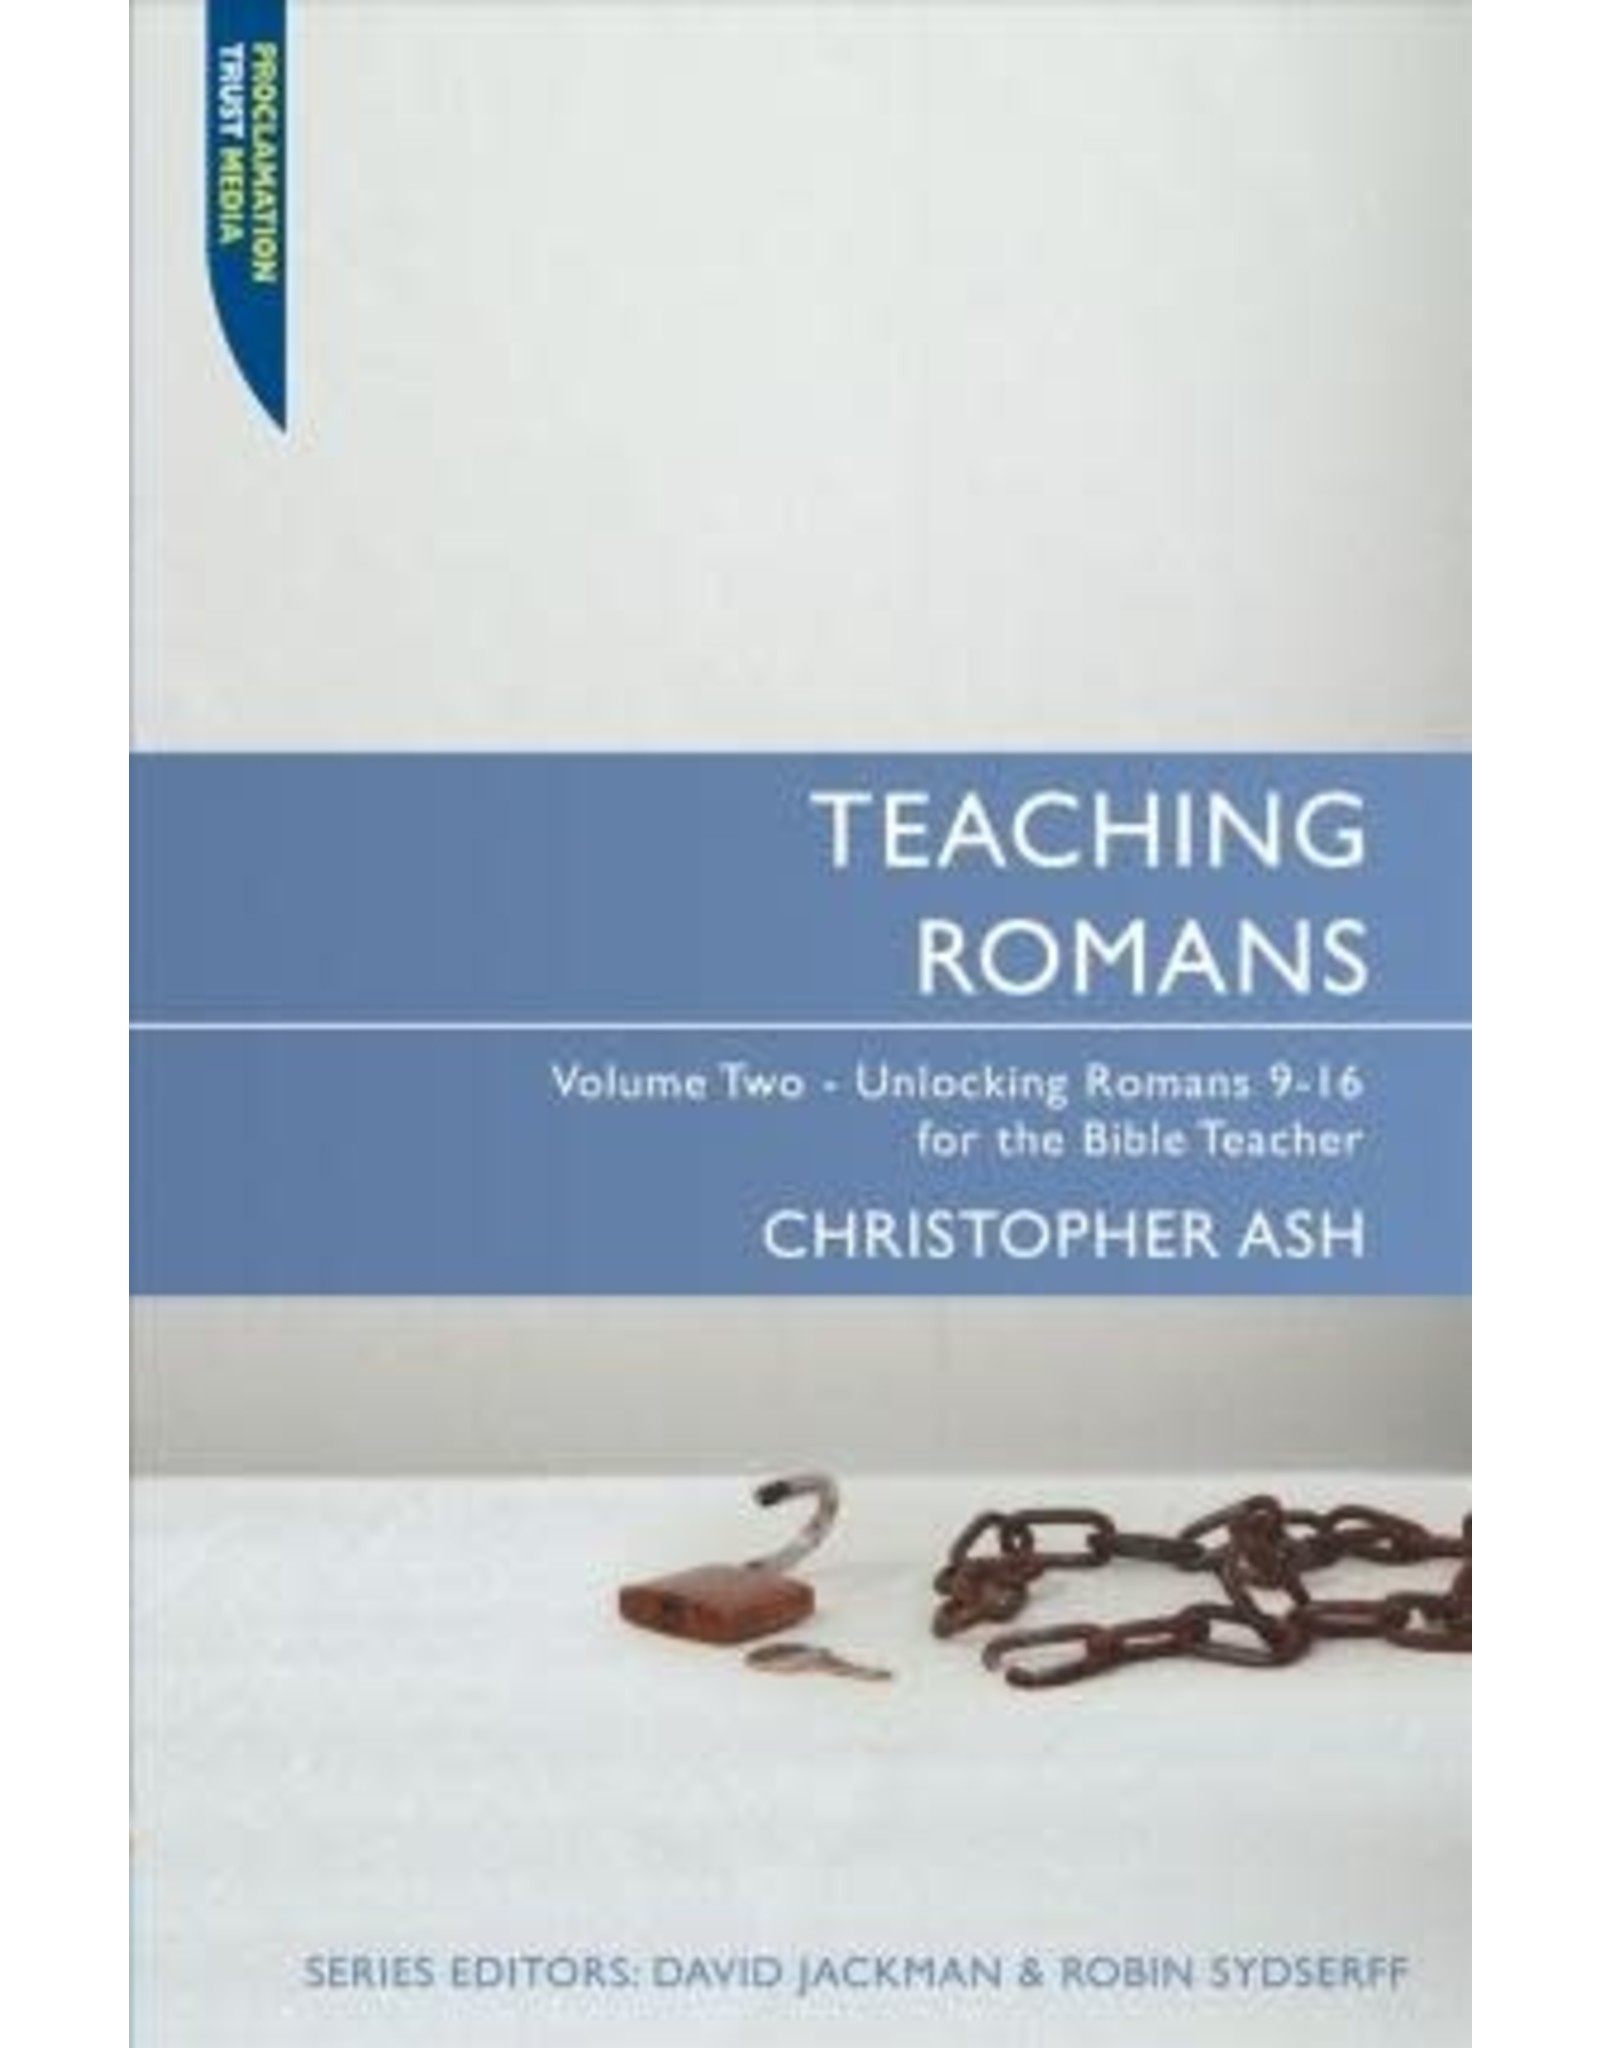 Ash Teaching Romans, Volume Two